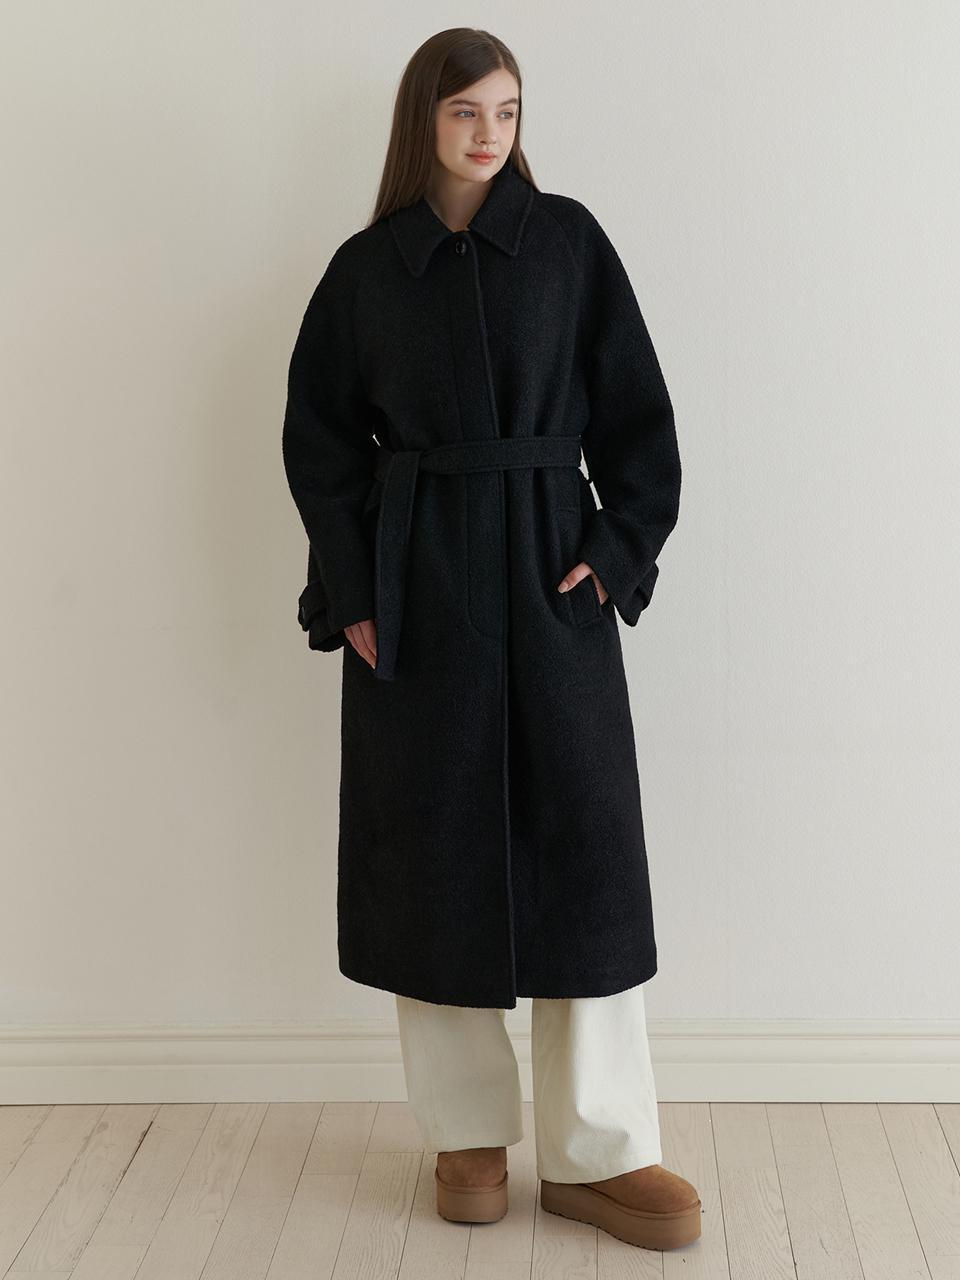 Wintry boucle coat (black)